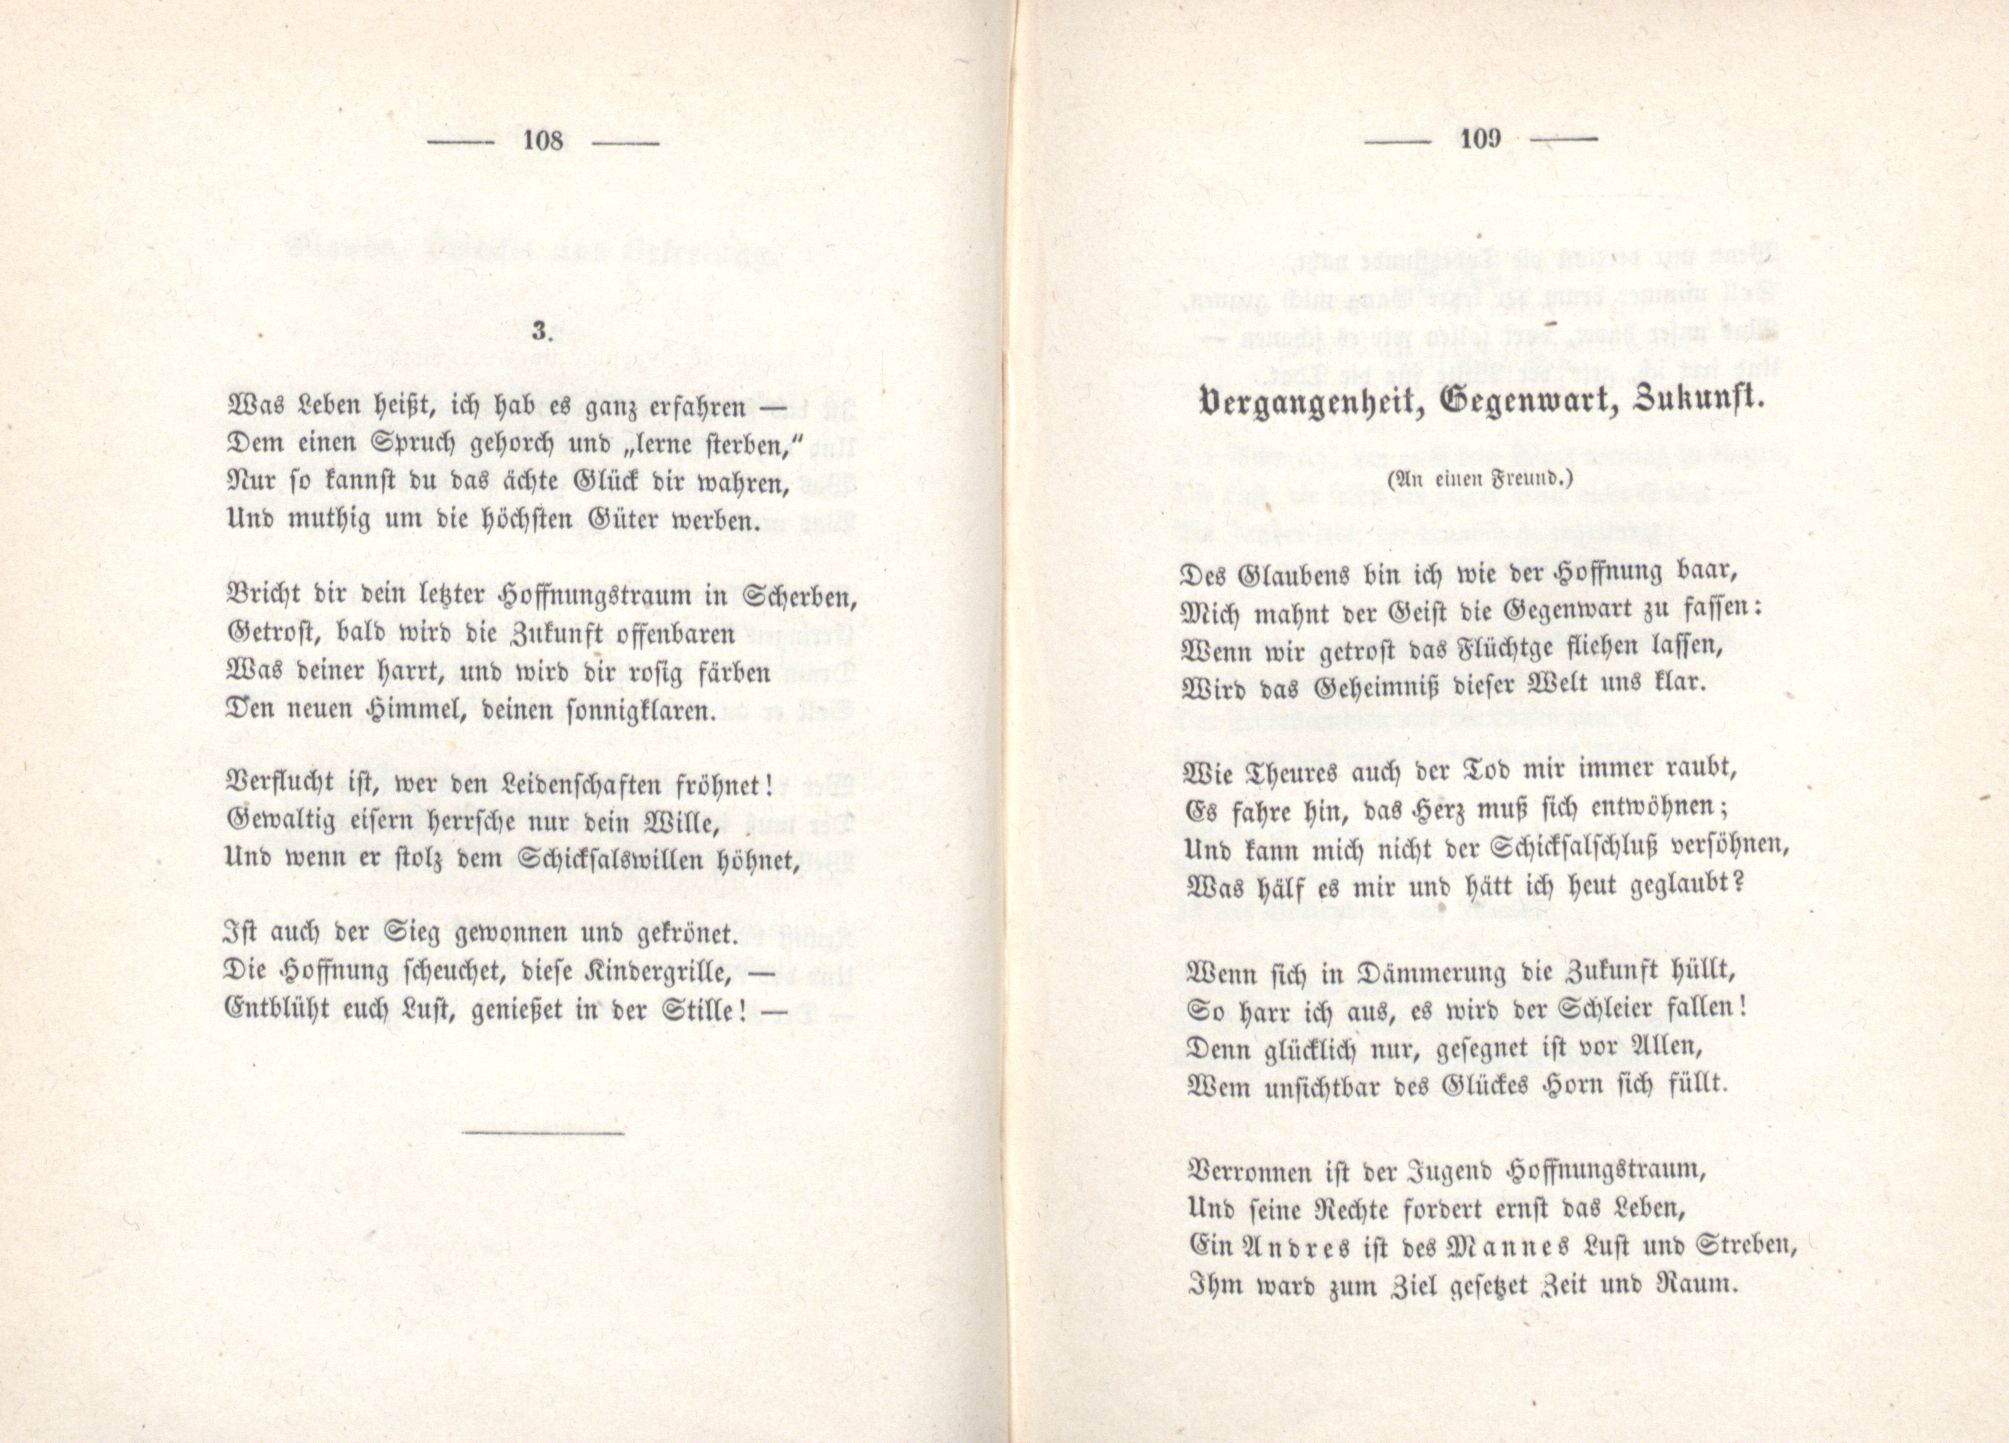 Vergangenheit, Gegenwart, Zukunft (1853) | 1. (108-109) Main body of text